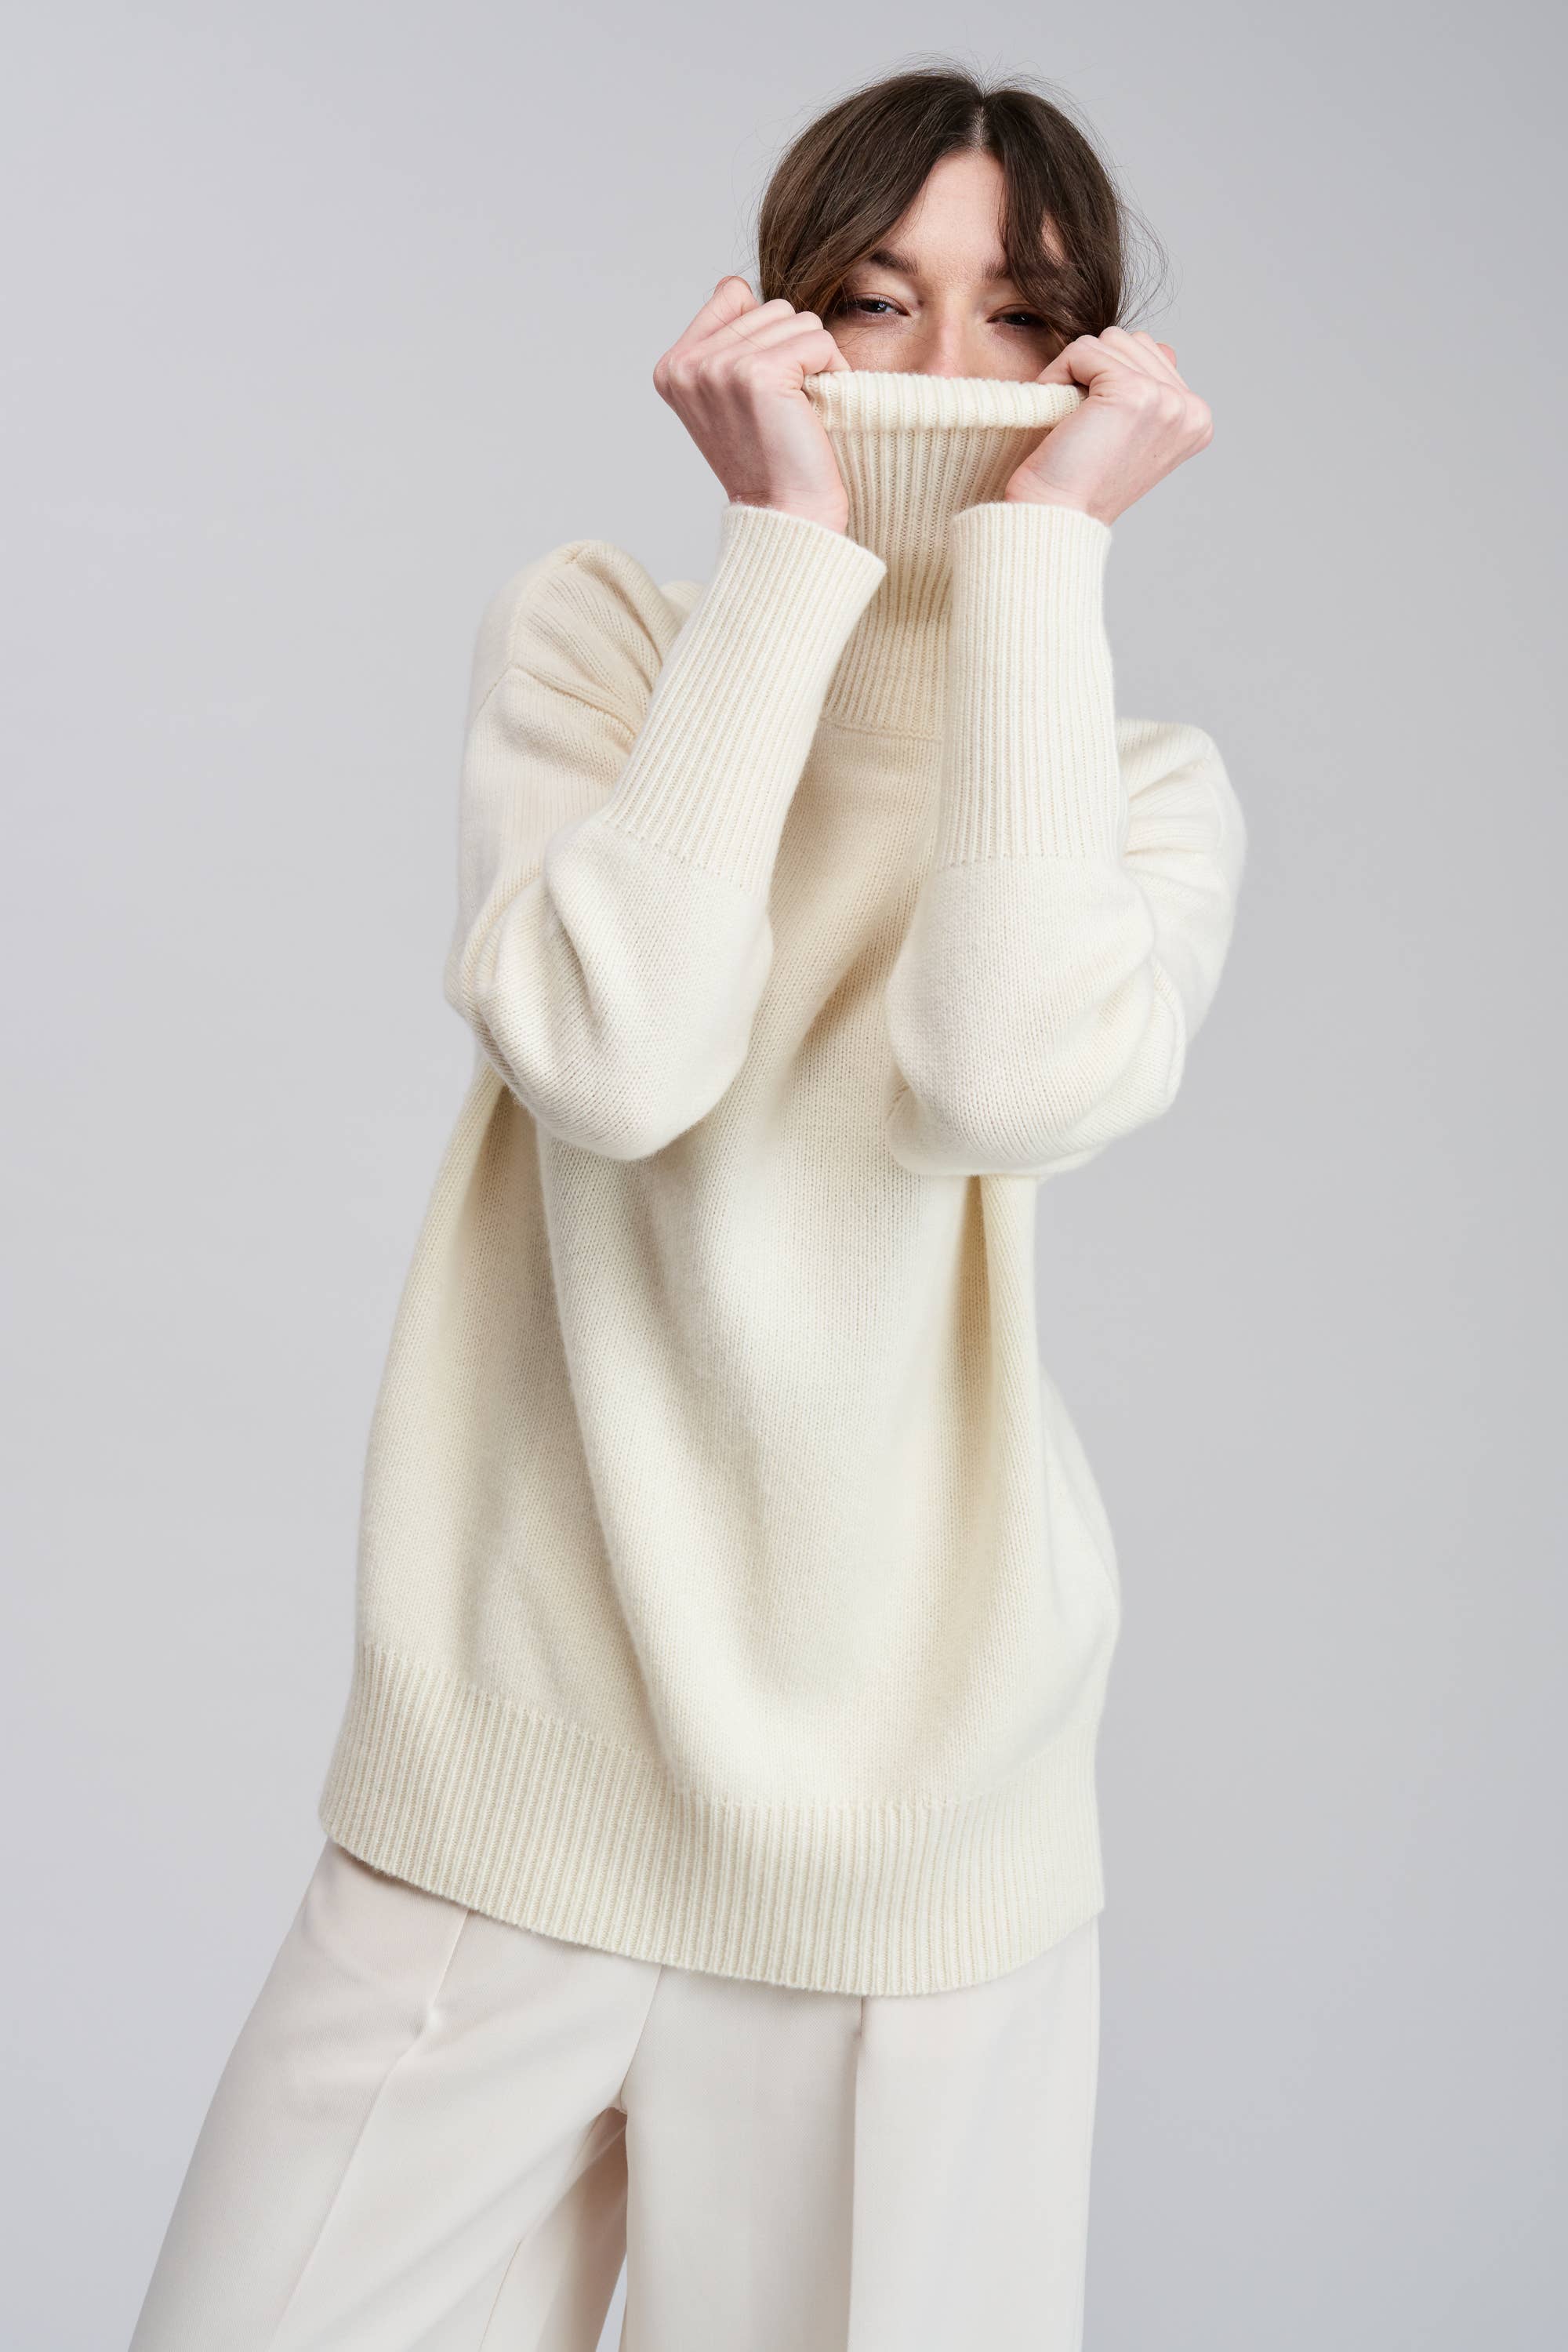 White Denim and Cream Slouchy Sweater, Hollie Elizabeth